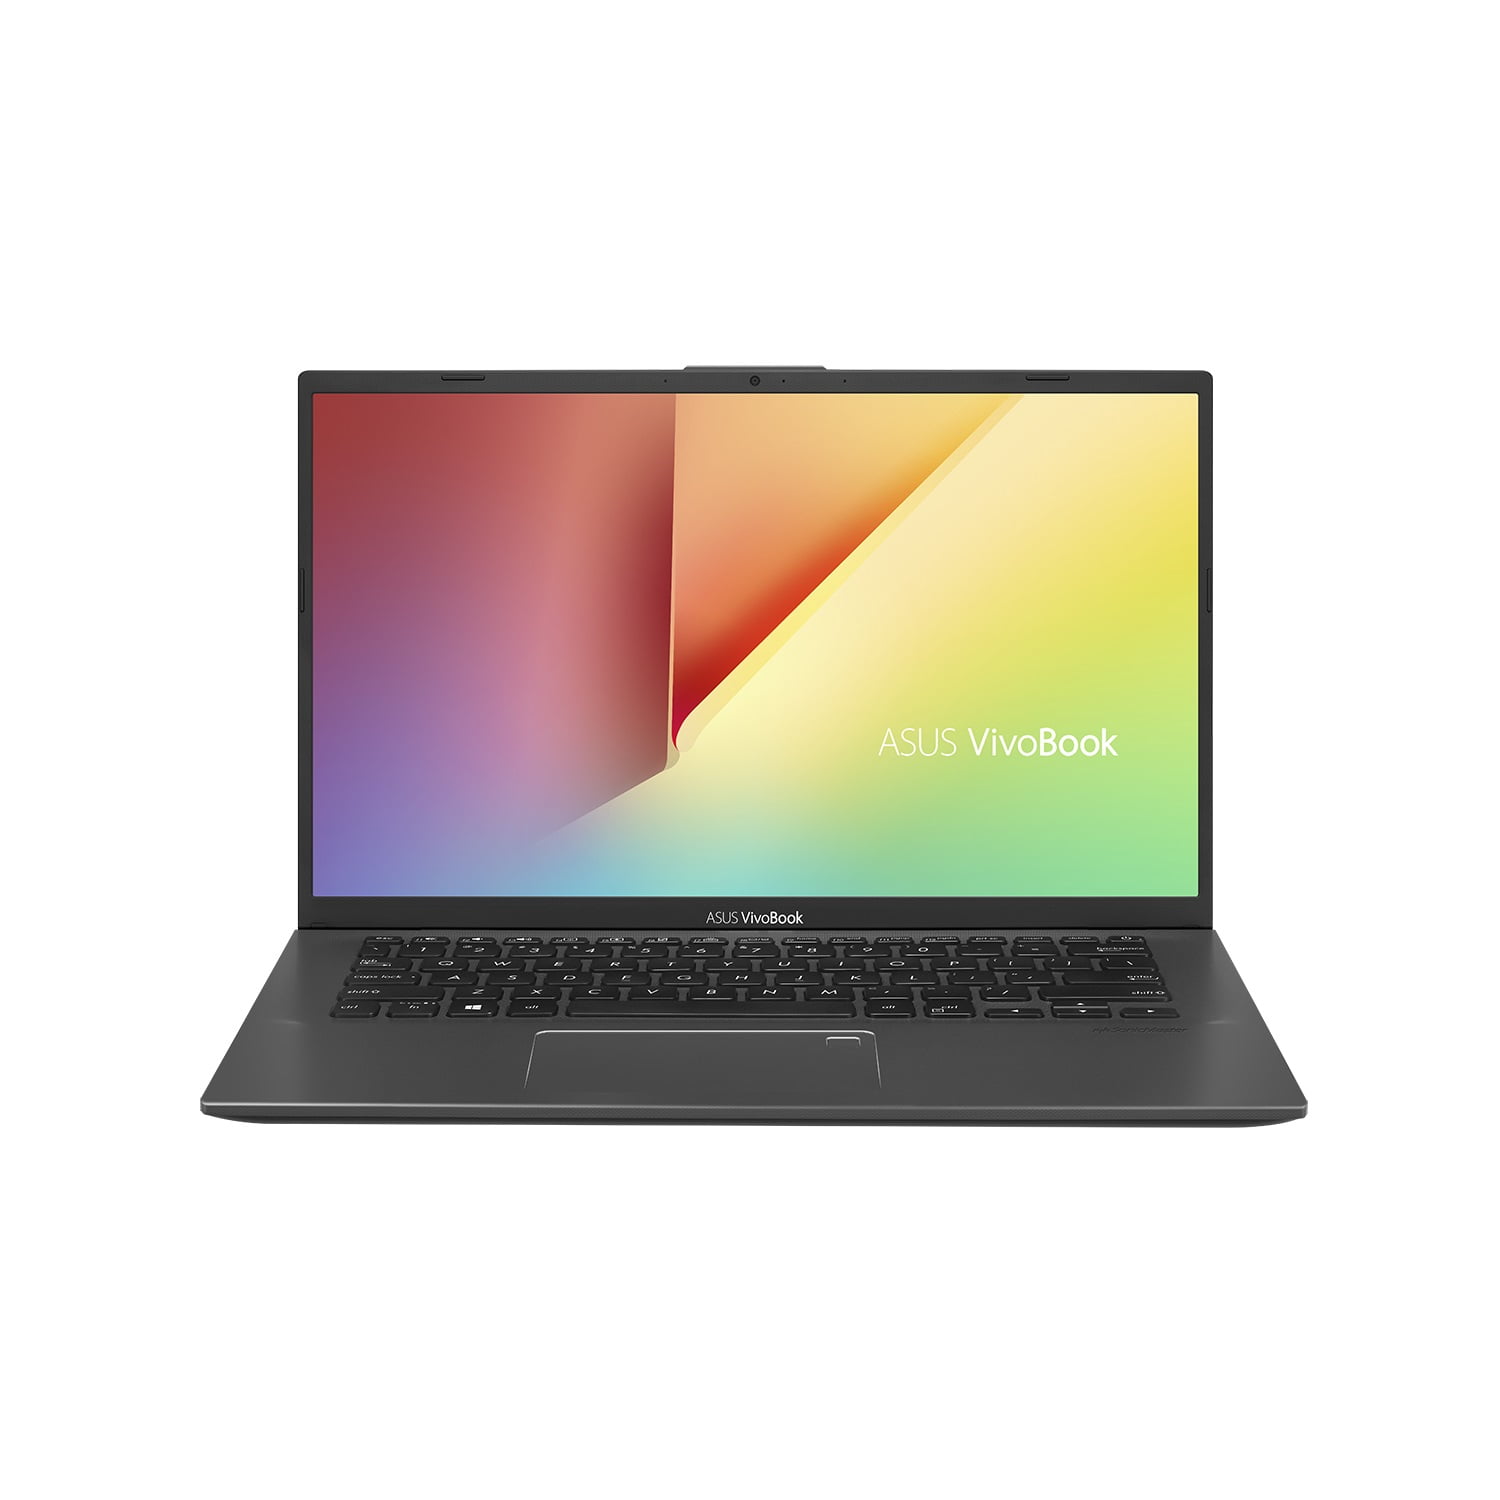 ASUS VivoBook 14" Ryzen 3 8/256 Laptop-Slate Grey, F412DA-WS33